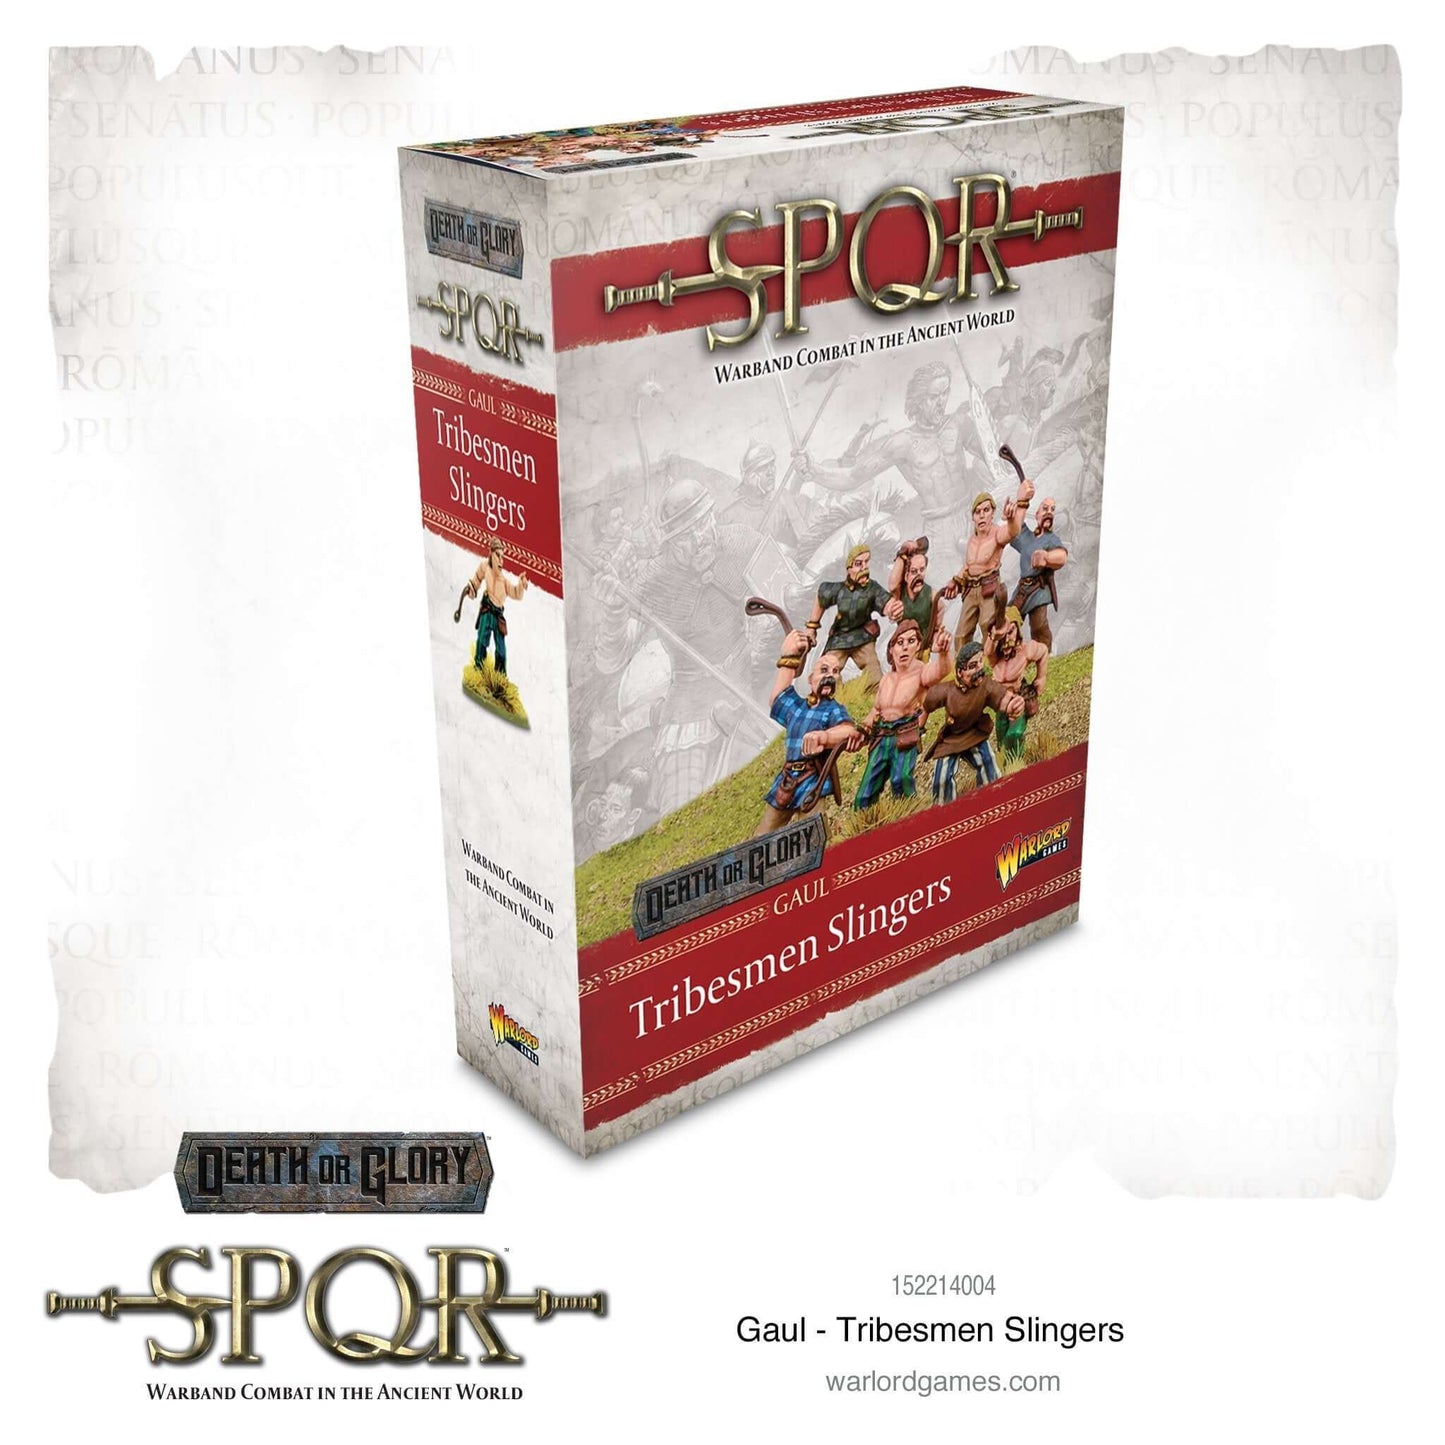 SPQR: Gaul - Tribesmen Slingers by Warlord